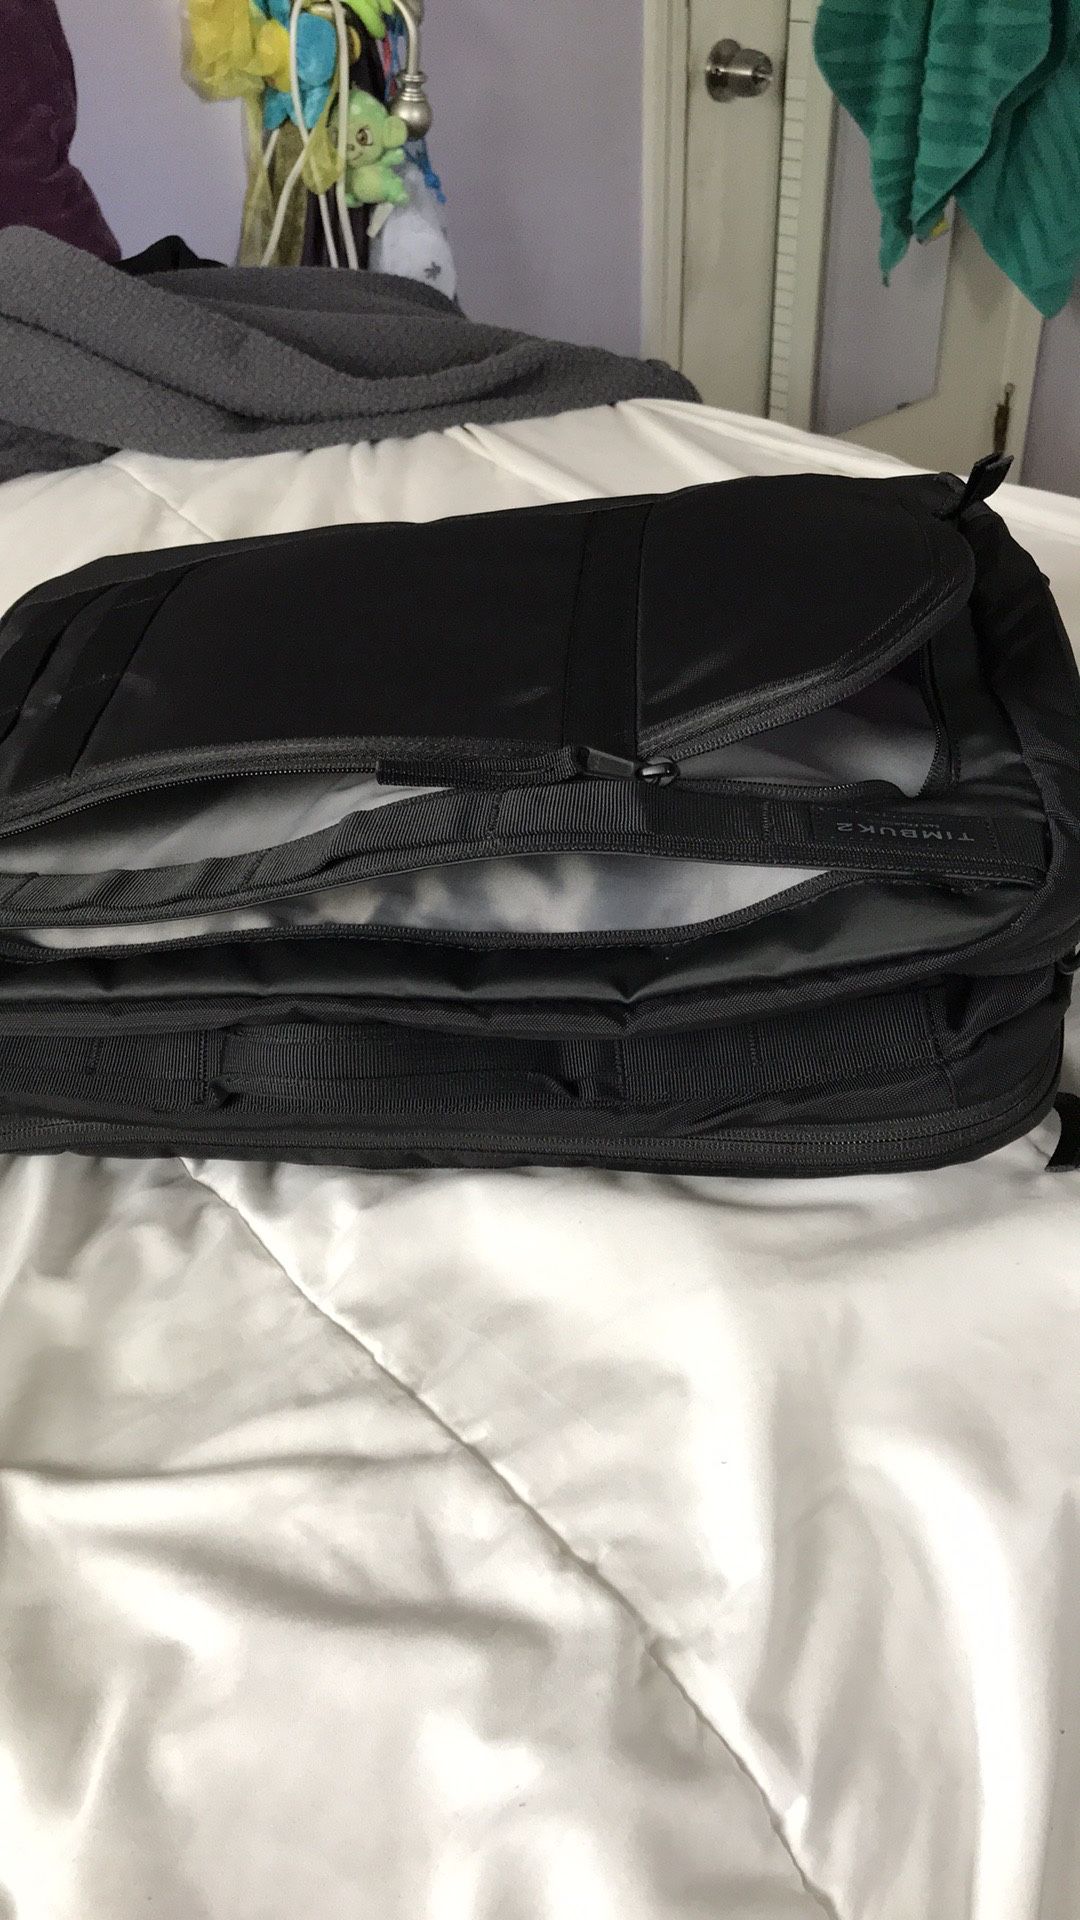 Timbuk2 laptop bag/backpack